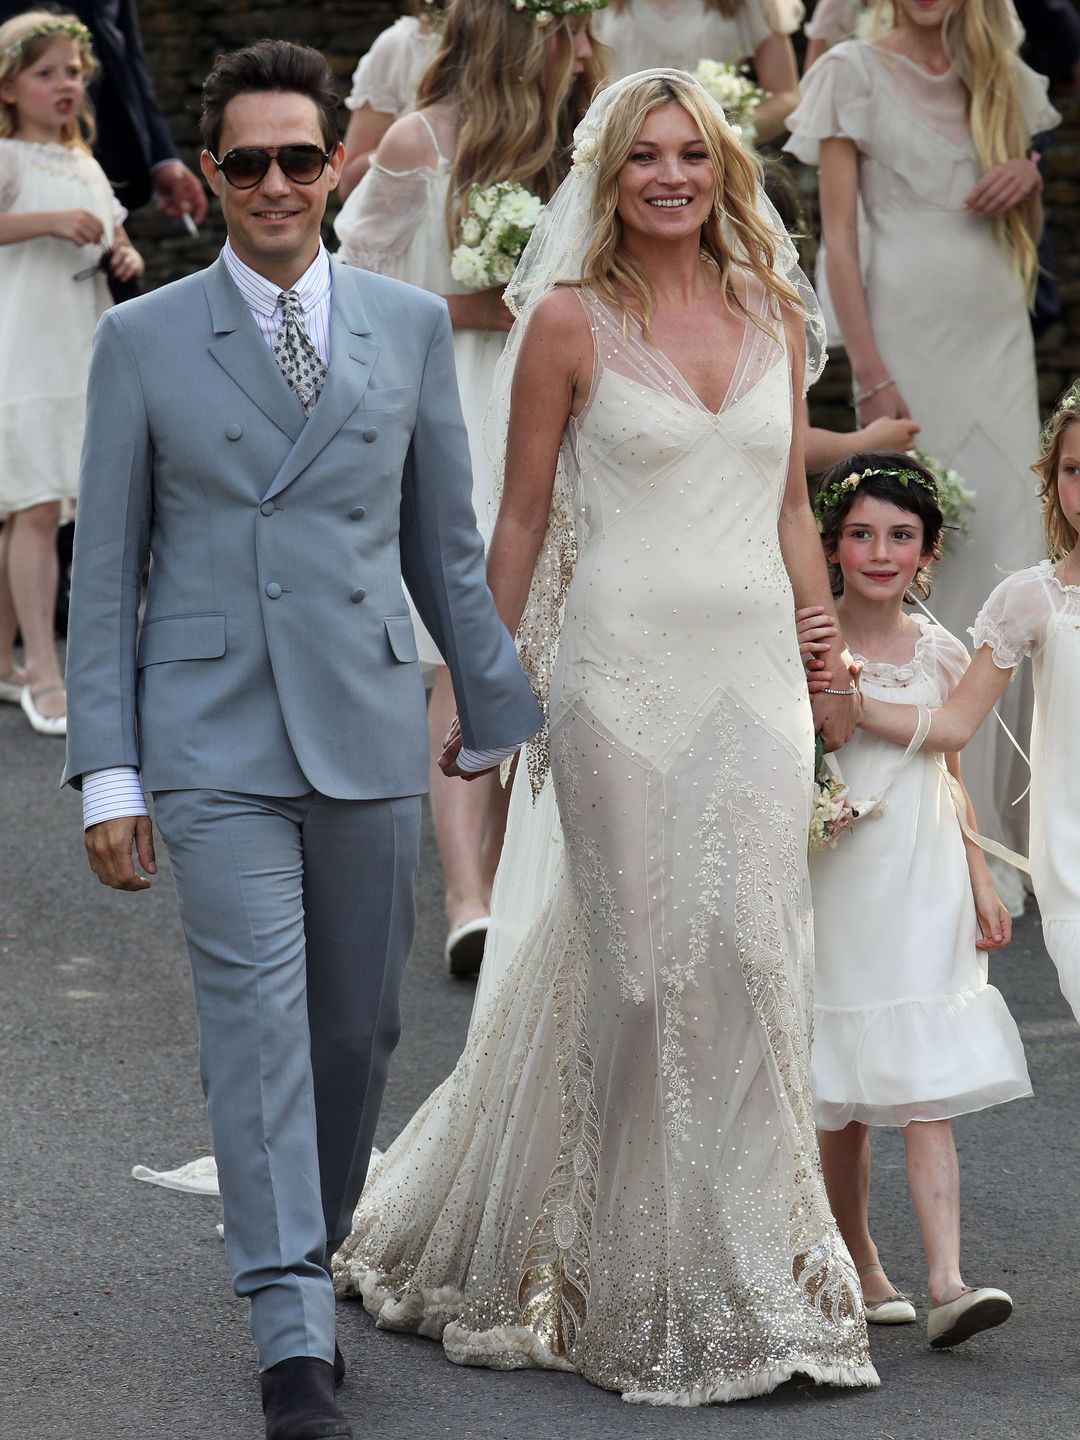 Kate Moss and Jamie Hince at wedding, 2011